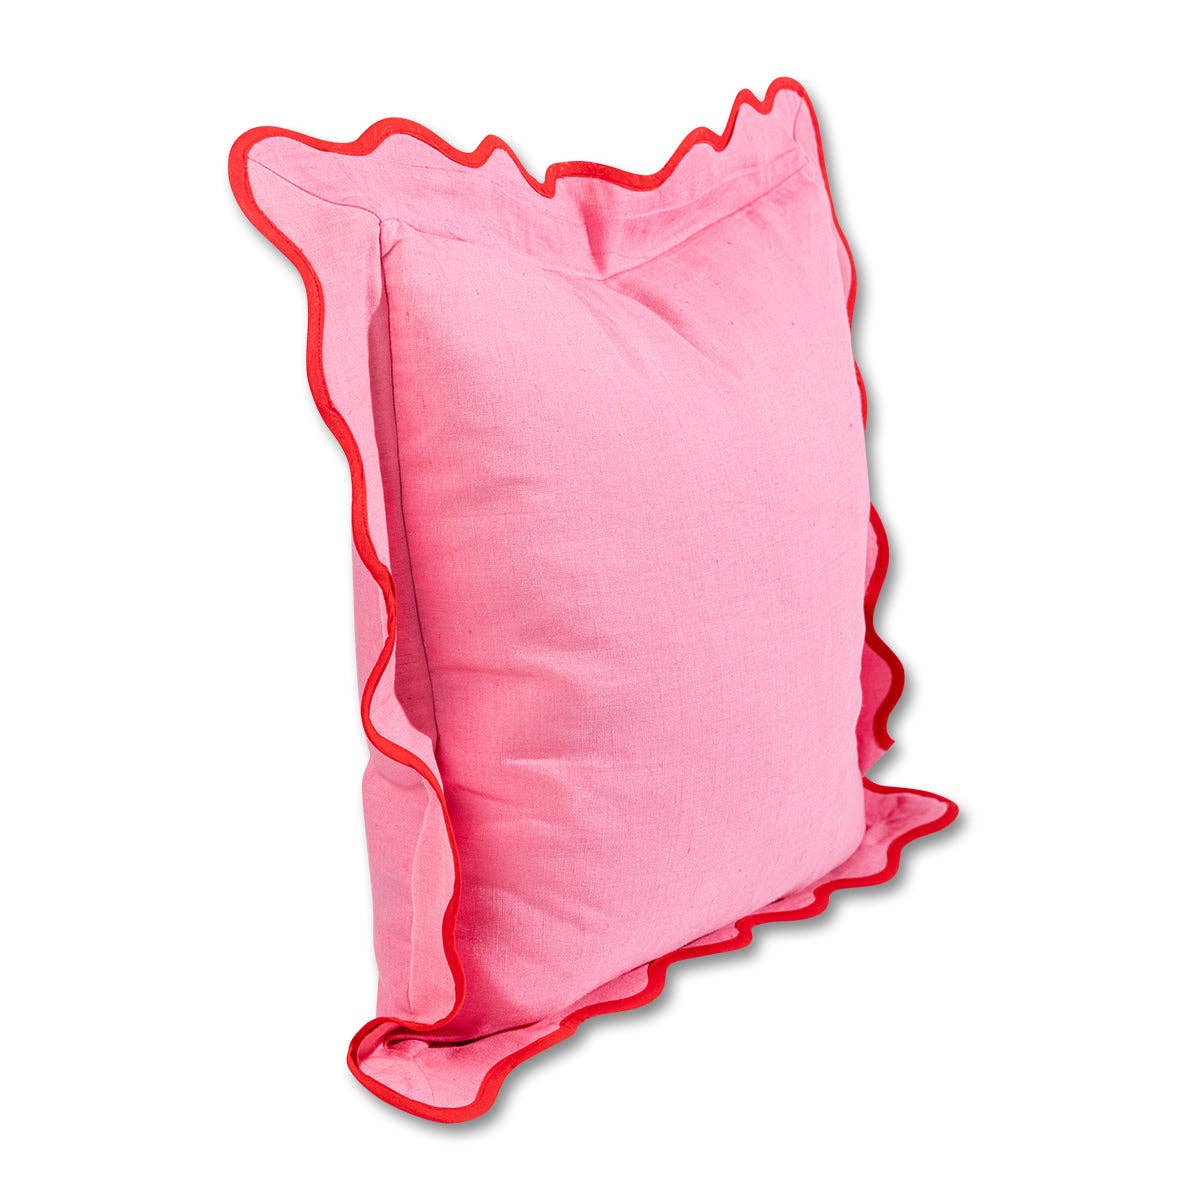 Furbish Studio - Darcy Linen Pillow - Light Pink + Cherry